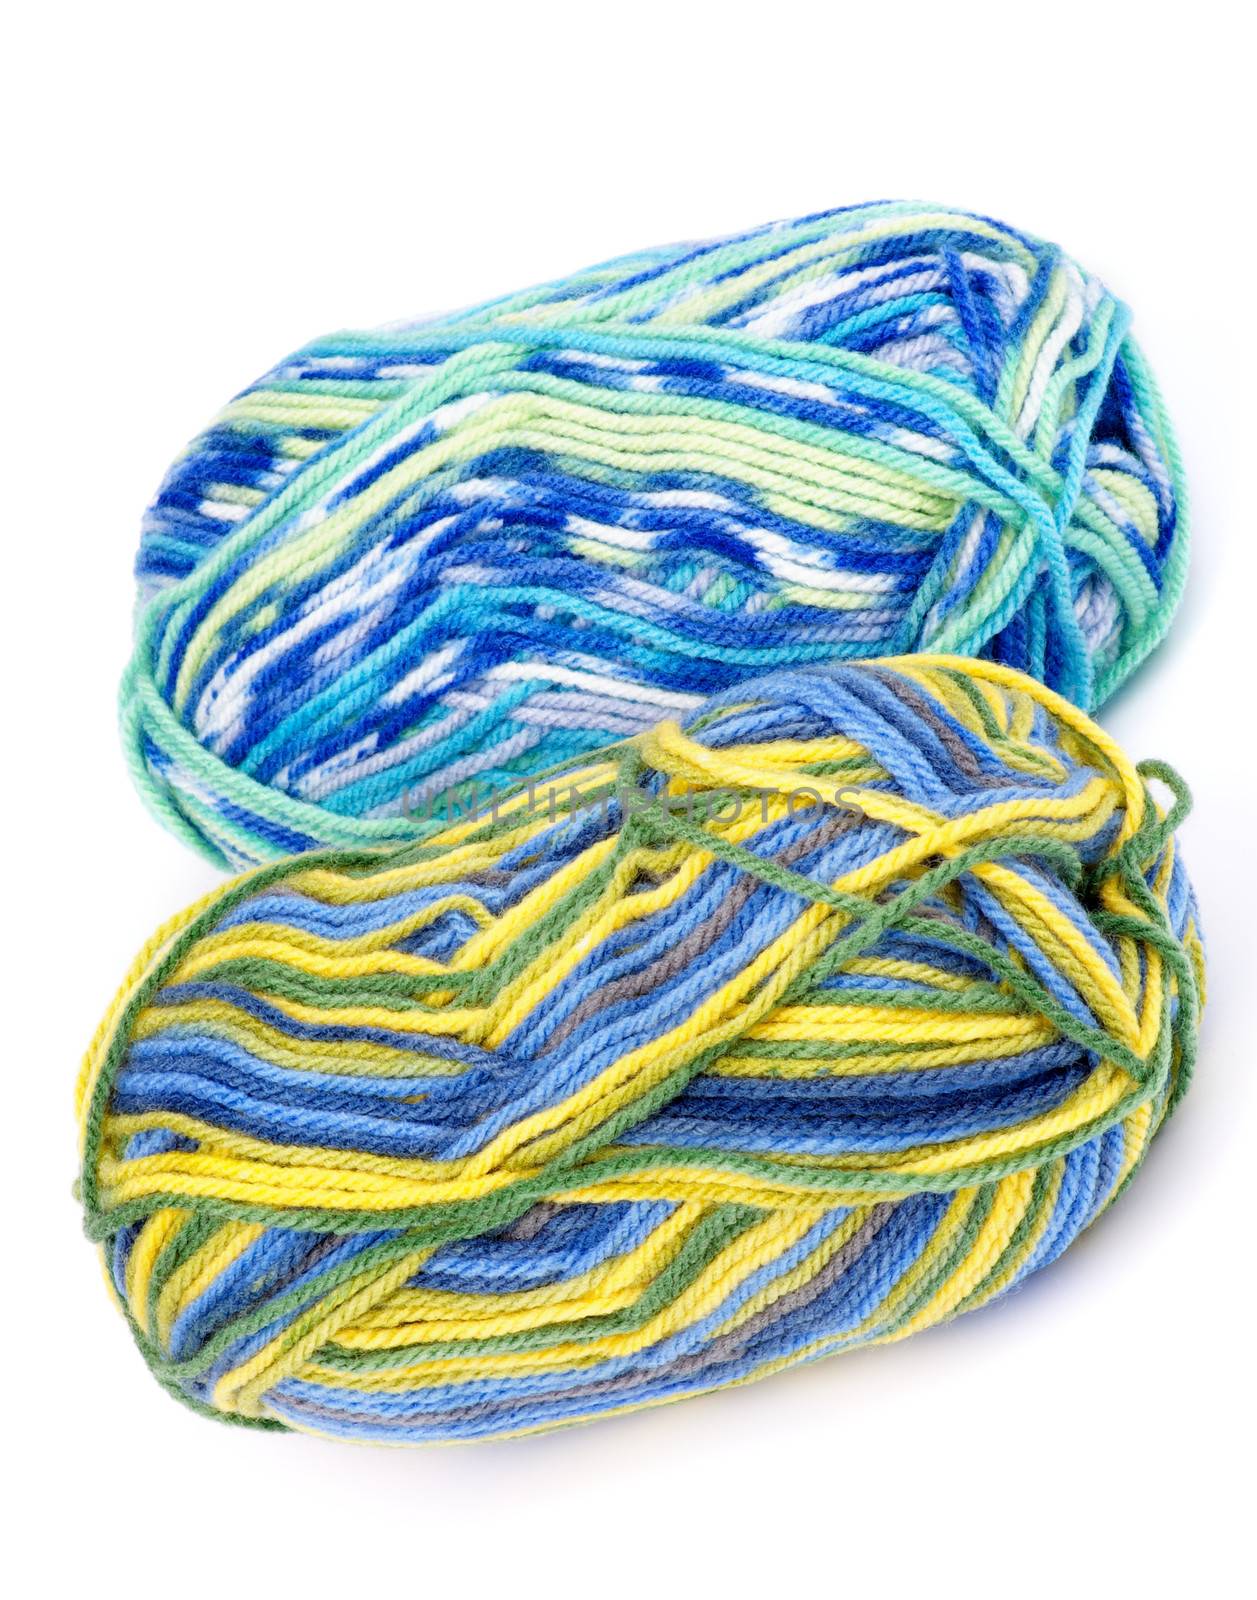 Multi Colored Knitting Yarn by zhekos